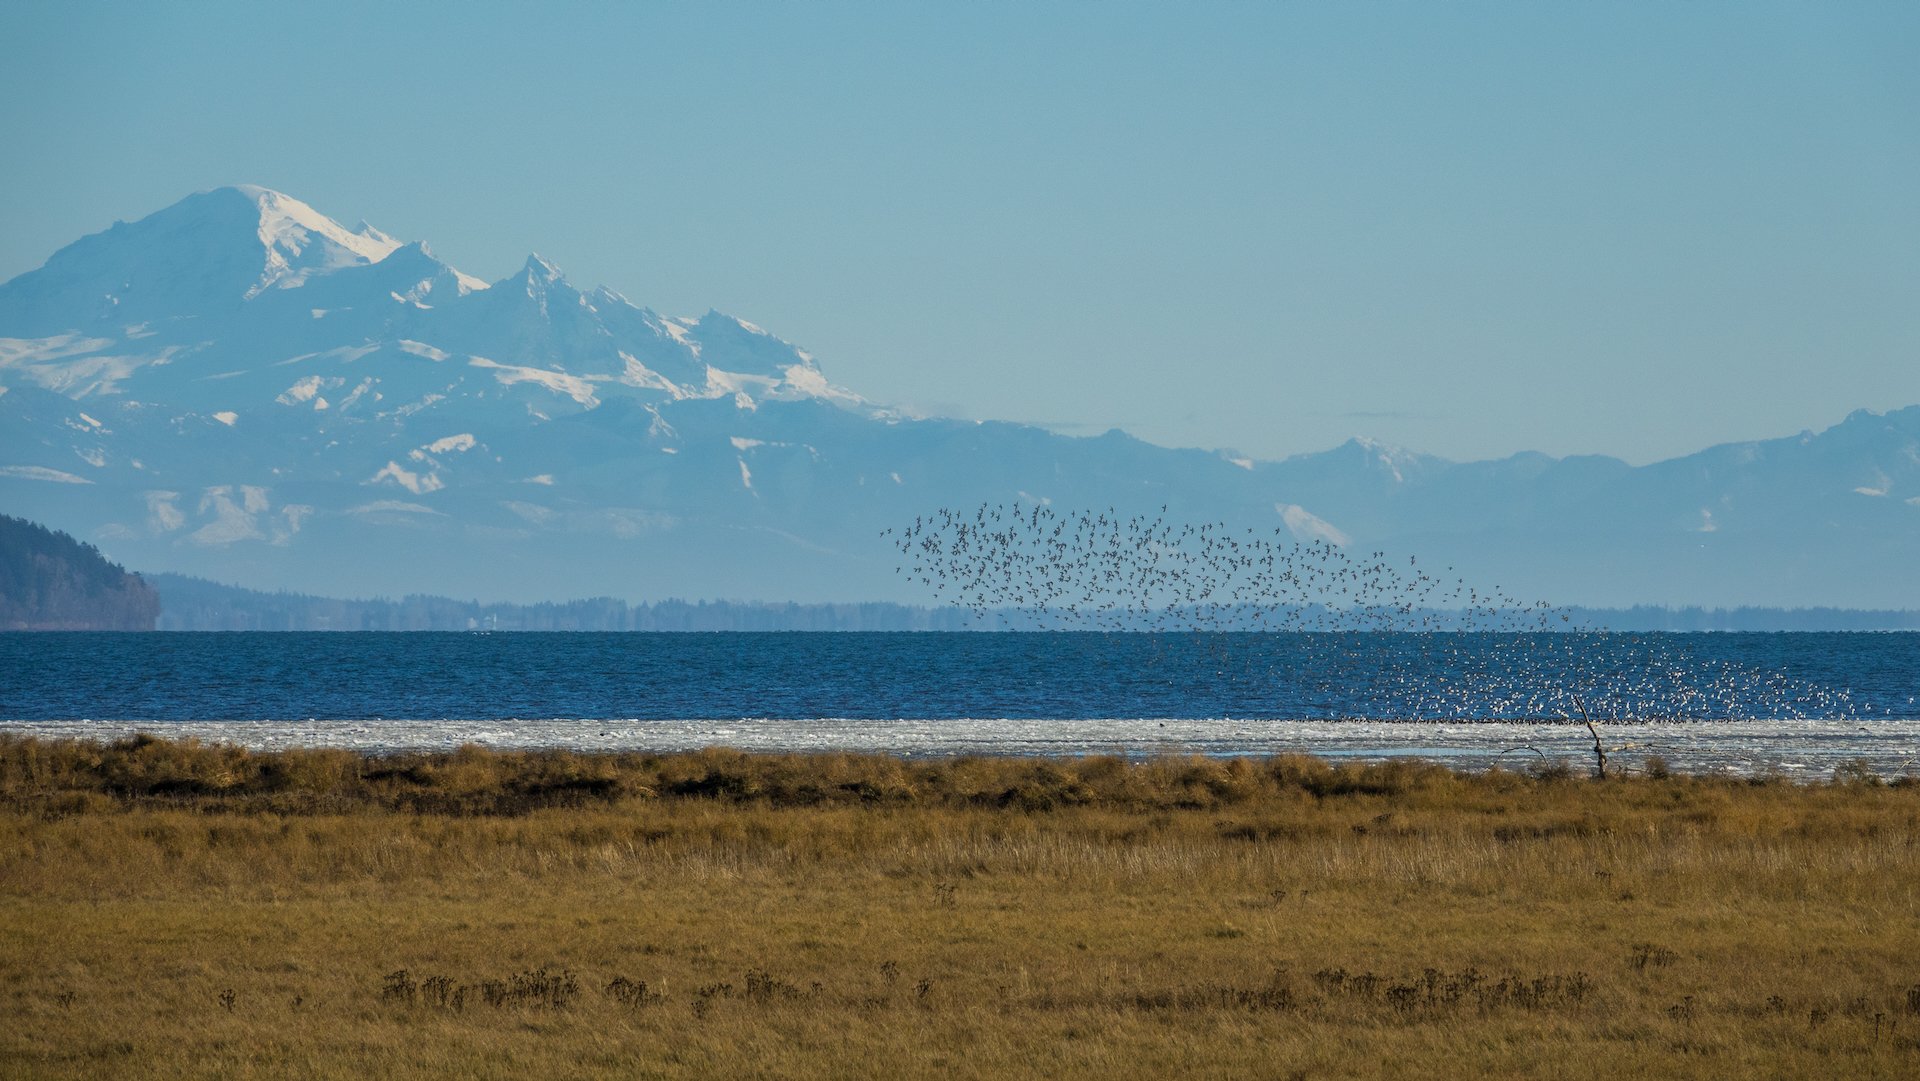  There were huge flocks of shorebirds that kept wheeling about along the shoreline. 